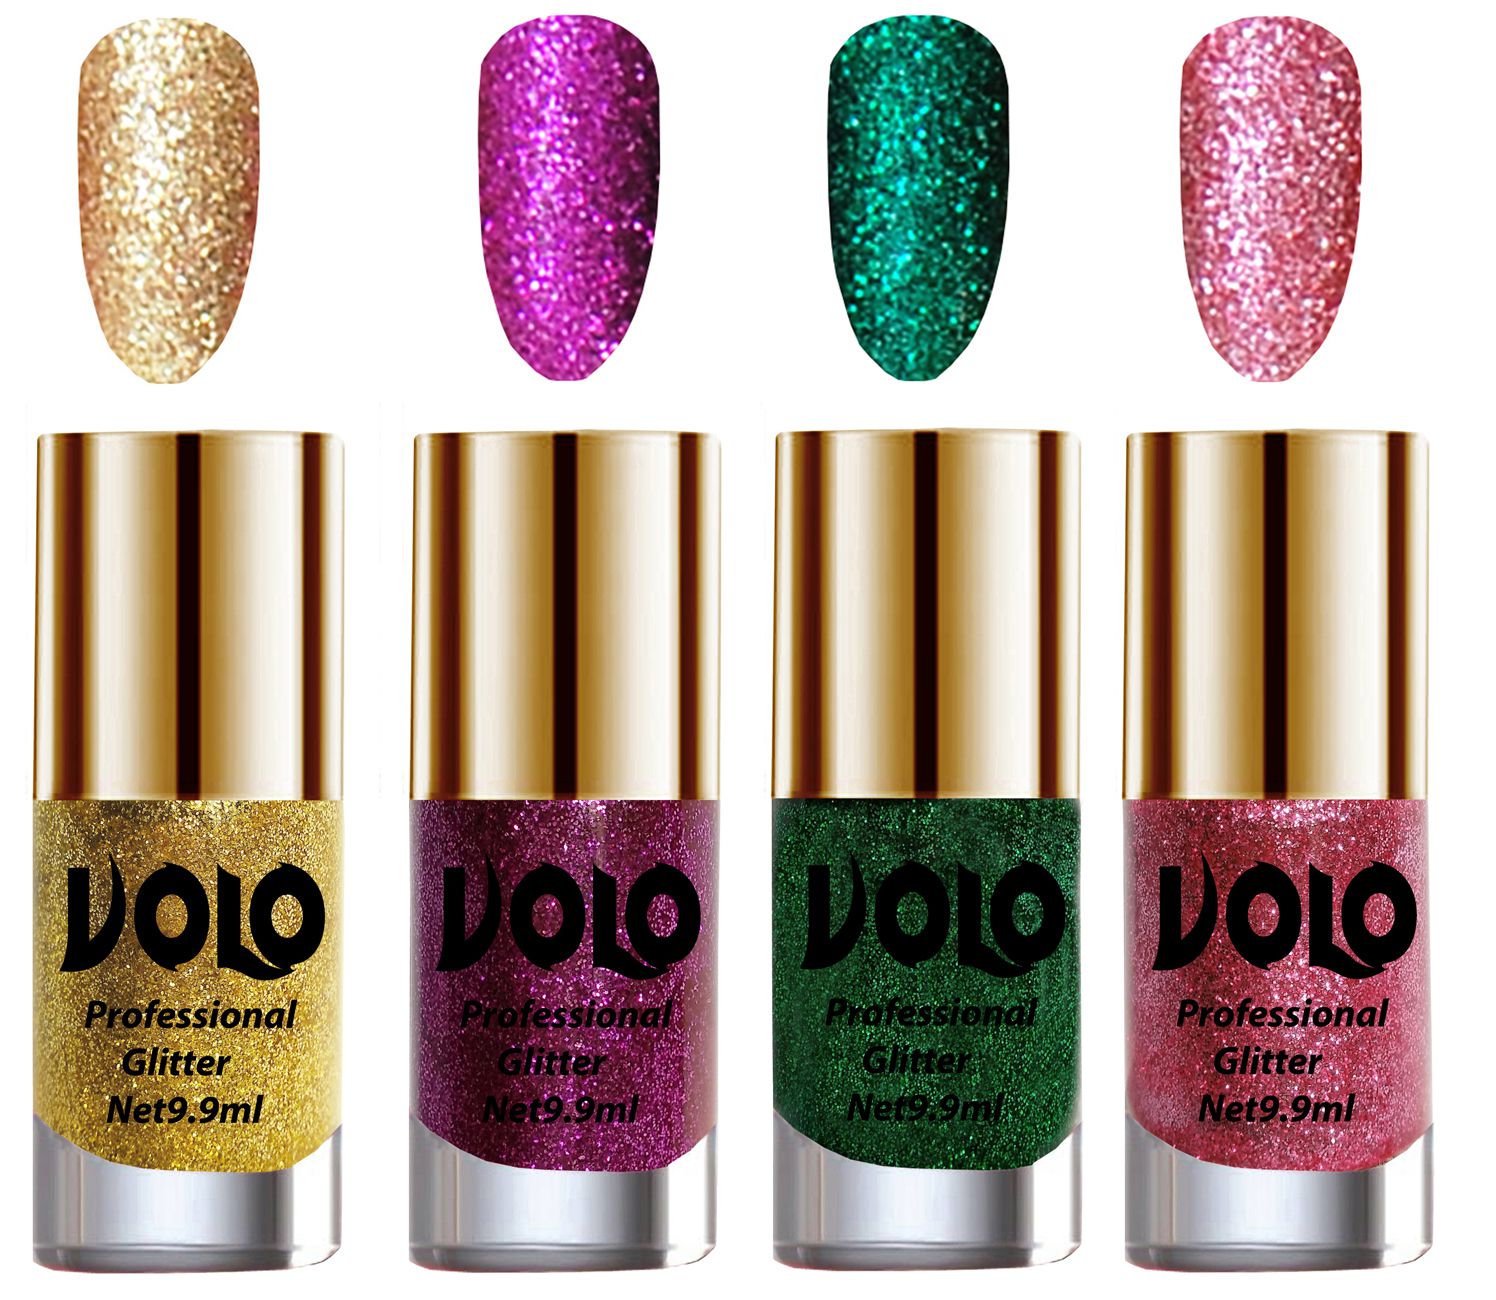     			VOLO Professionally Used Glitter Shine Nail Polish Gold,Purple,Green Pink Pack of 4 39 mL